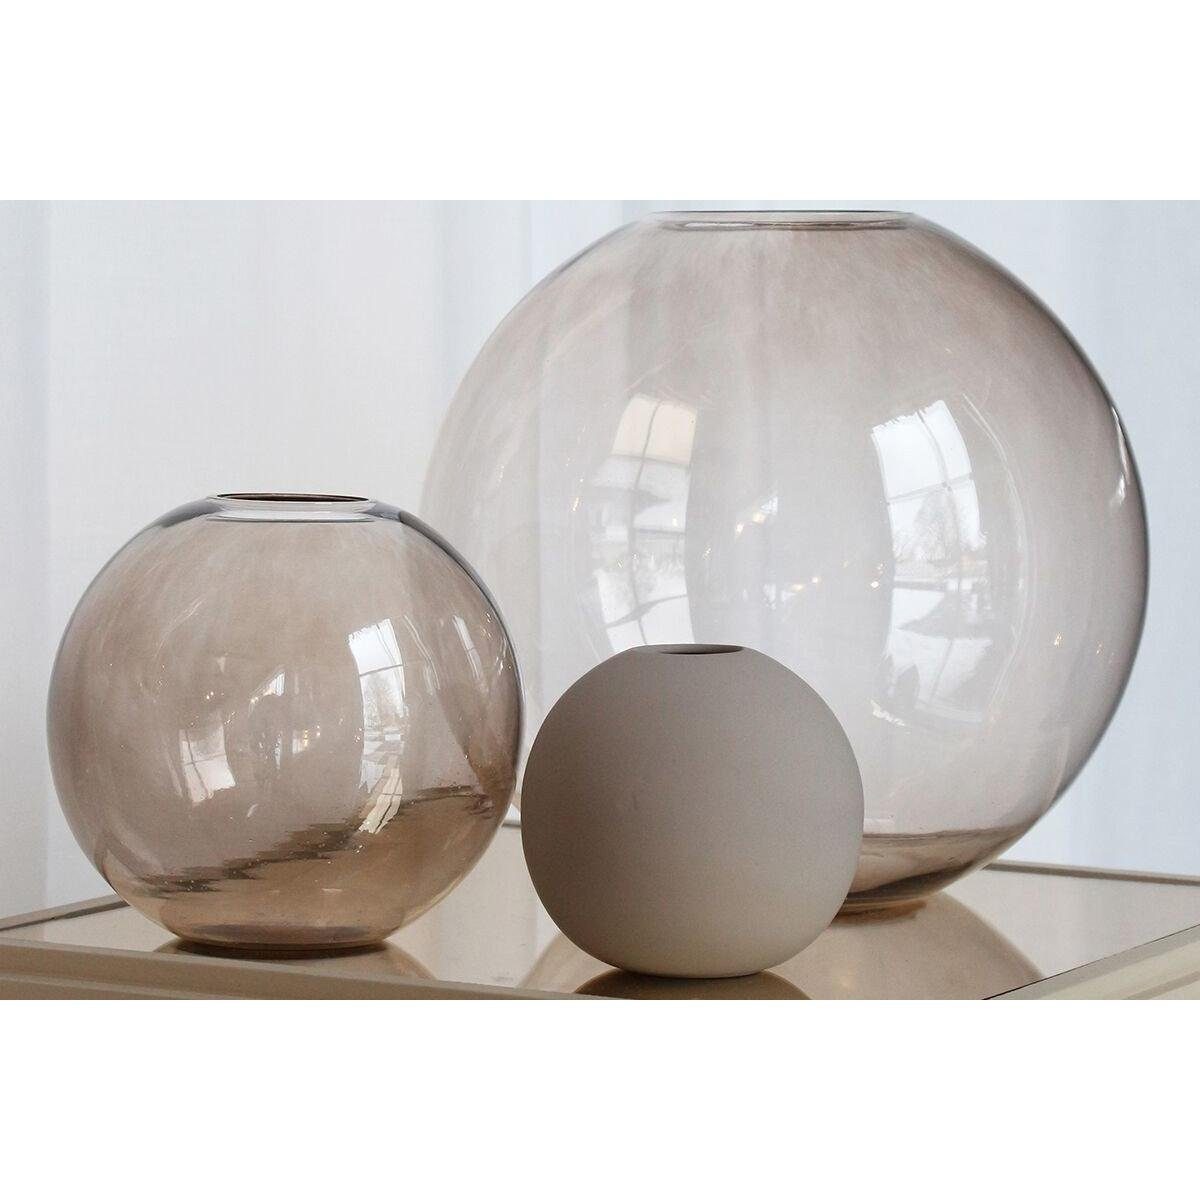 Design Ball (10cm) Dekovase Vase Sand Cooee